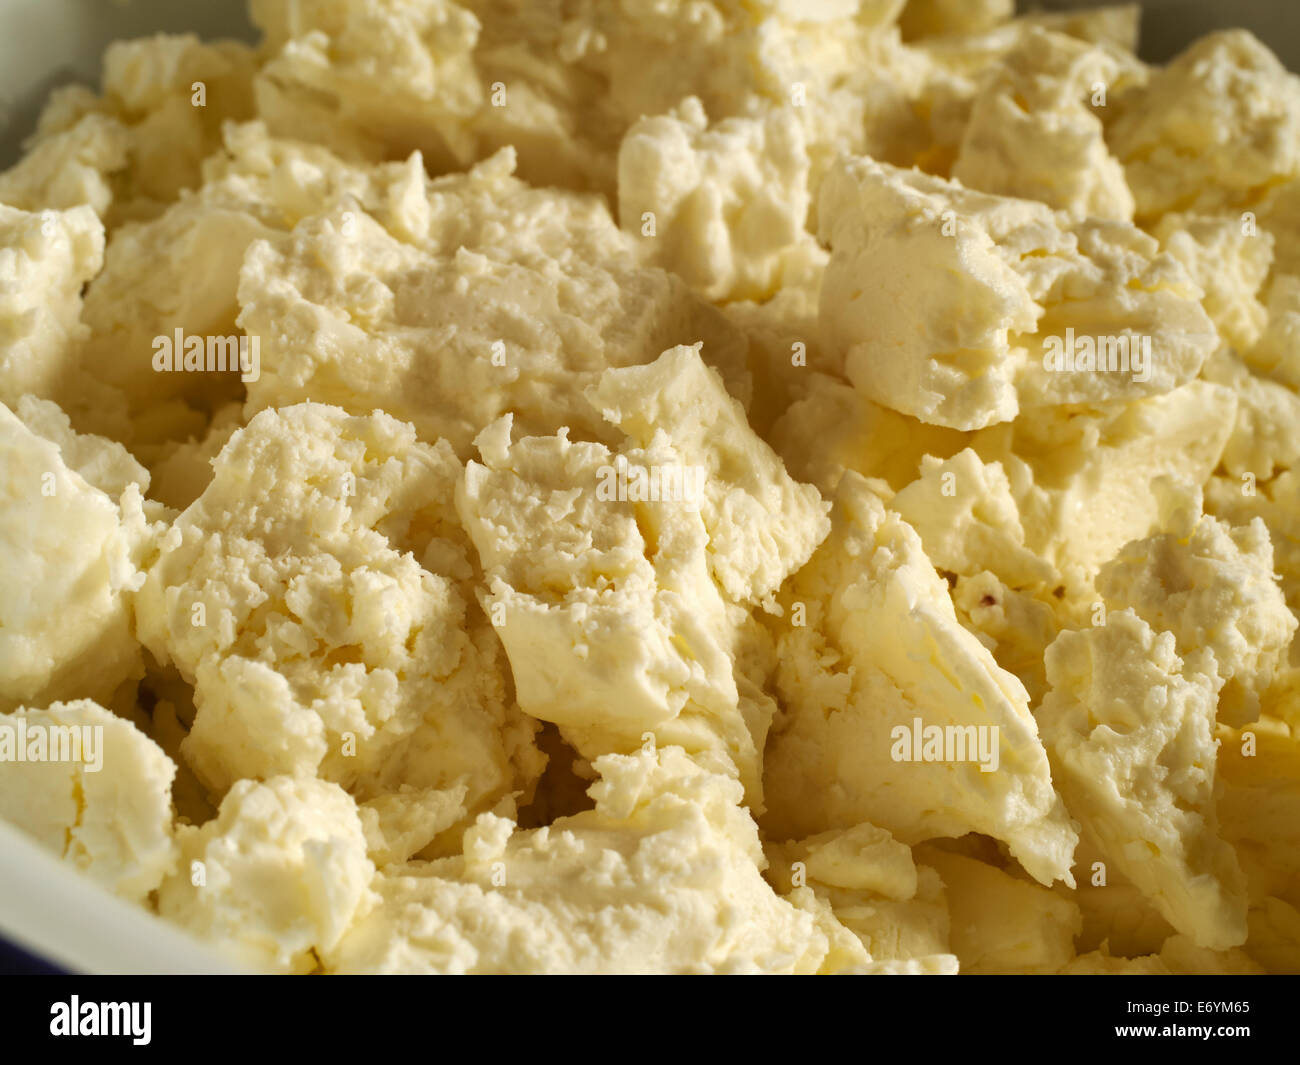 Bowl of crumbled feta cheese Stock Photo